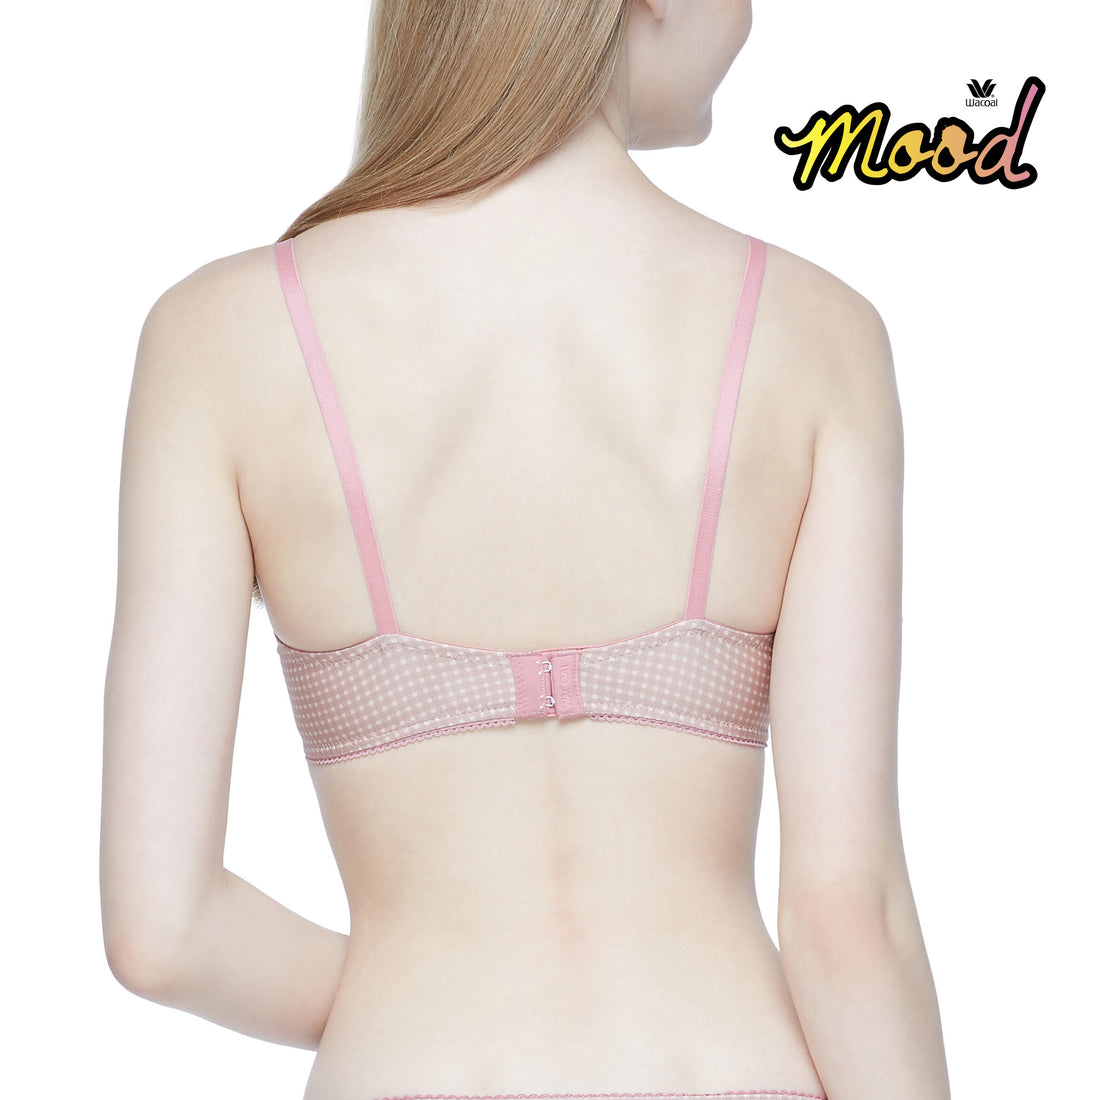 Wacoal Mood Teen underwear underwired bra, Gingham pattern, model MM1H37, pink (BN)